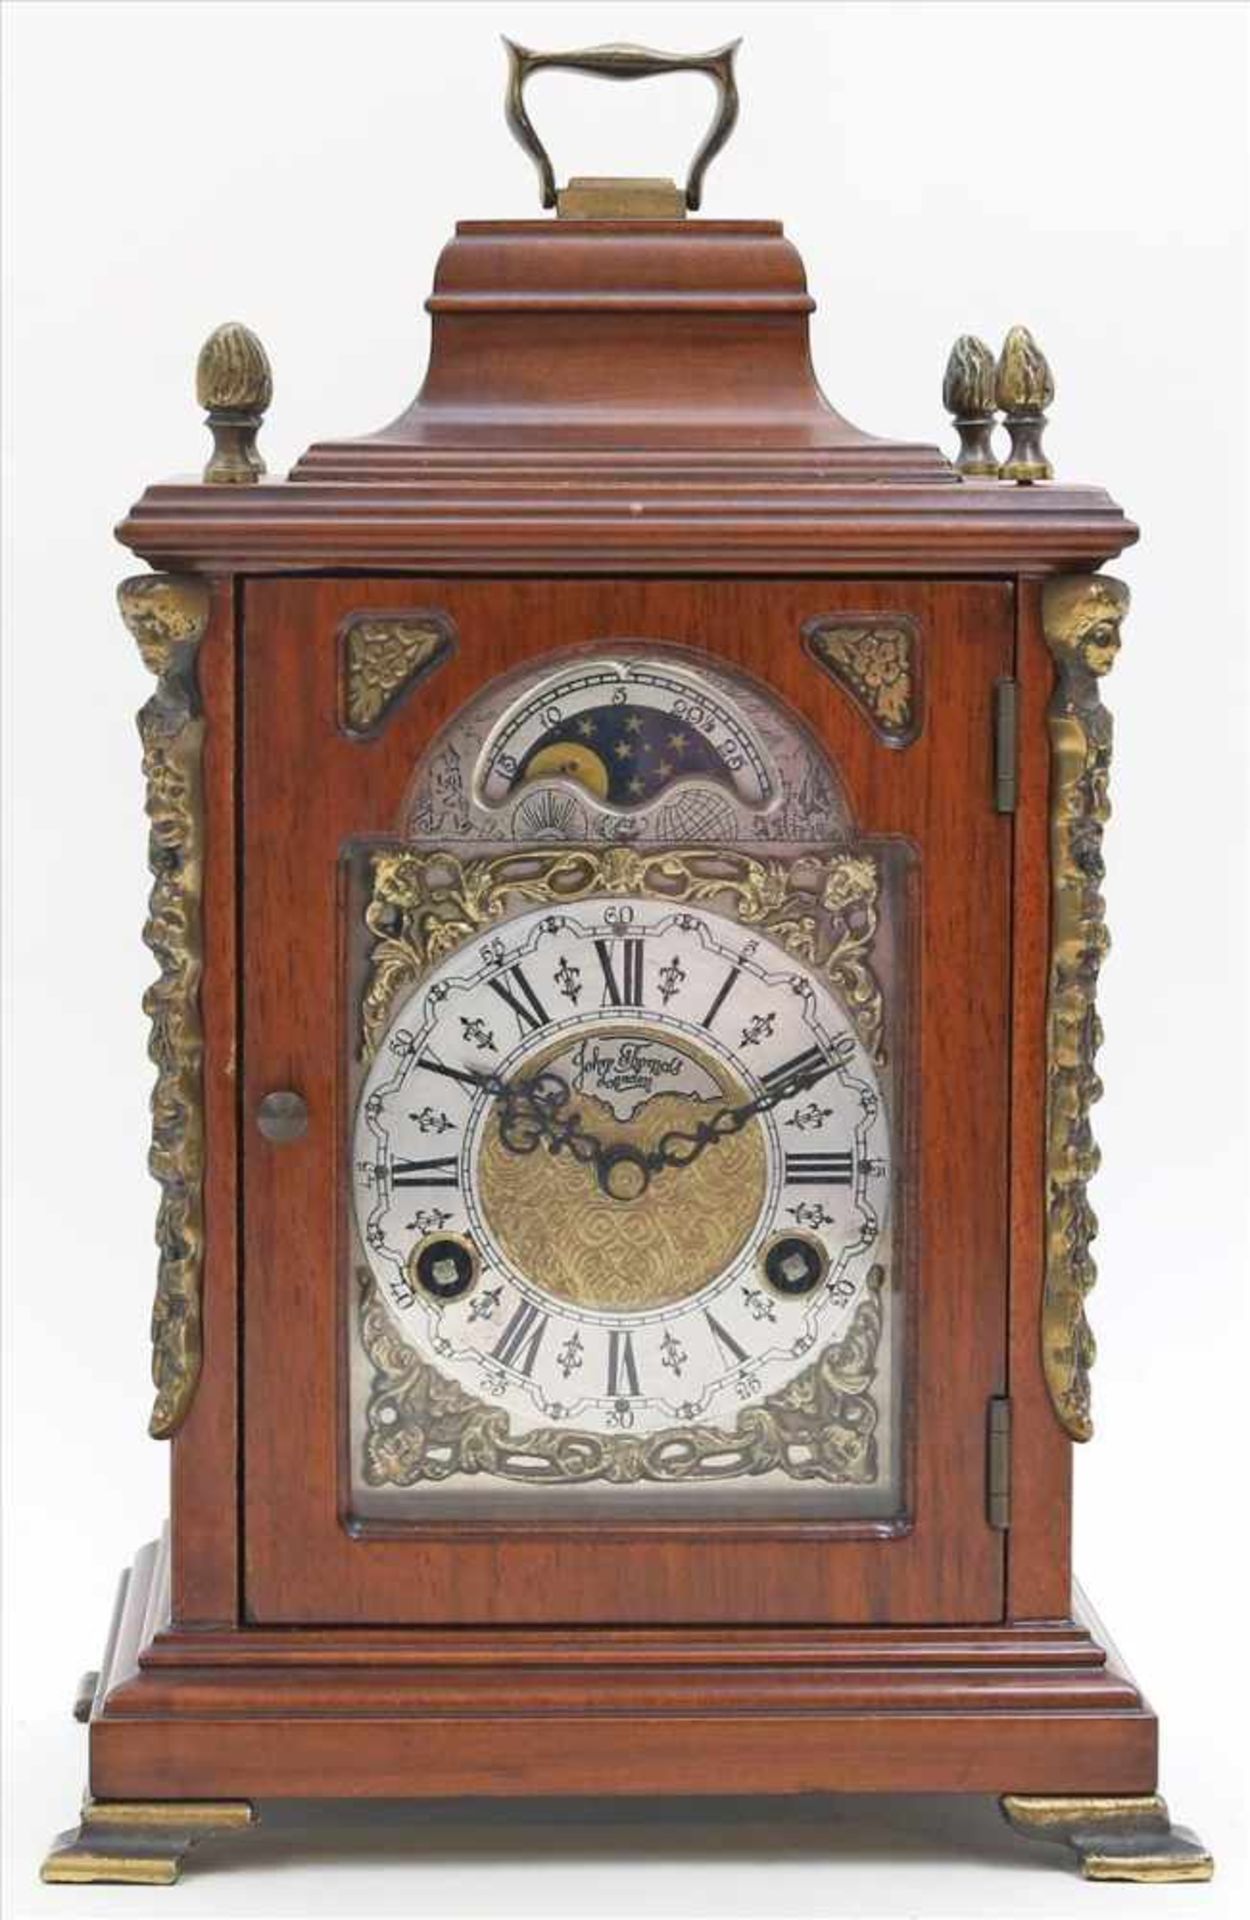 Bracket-Clock "John Thomas London".